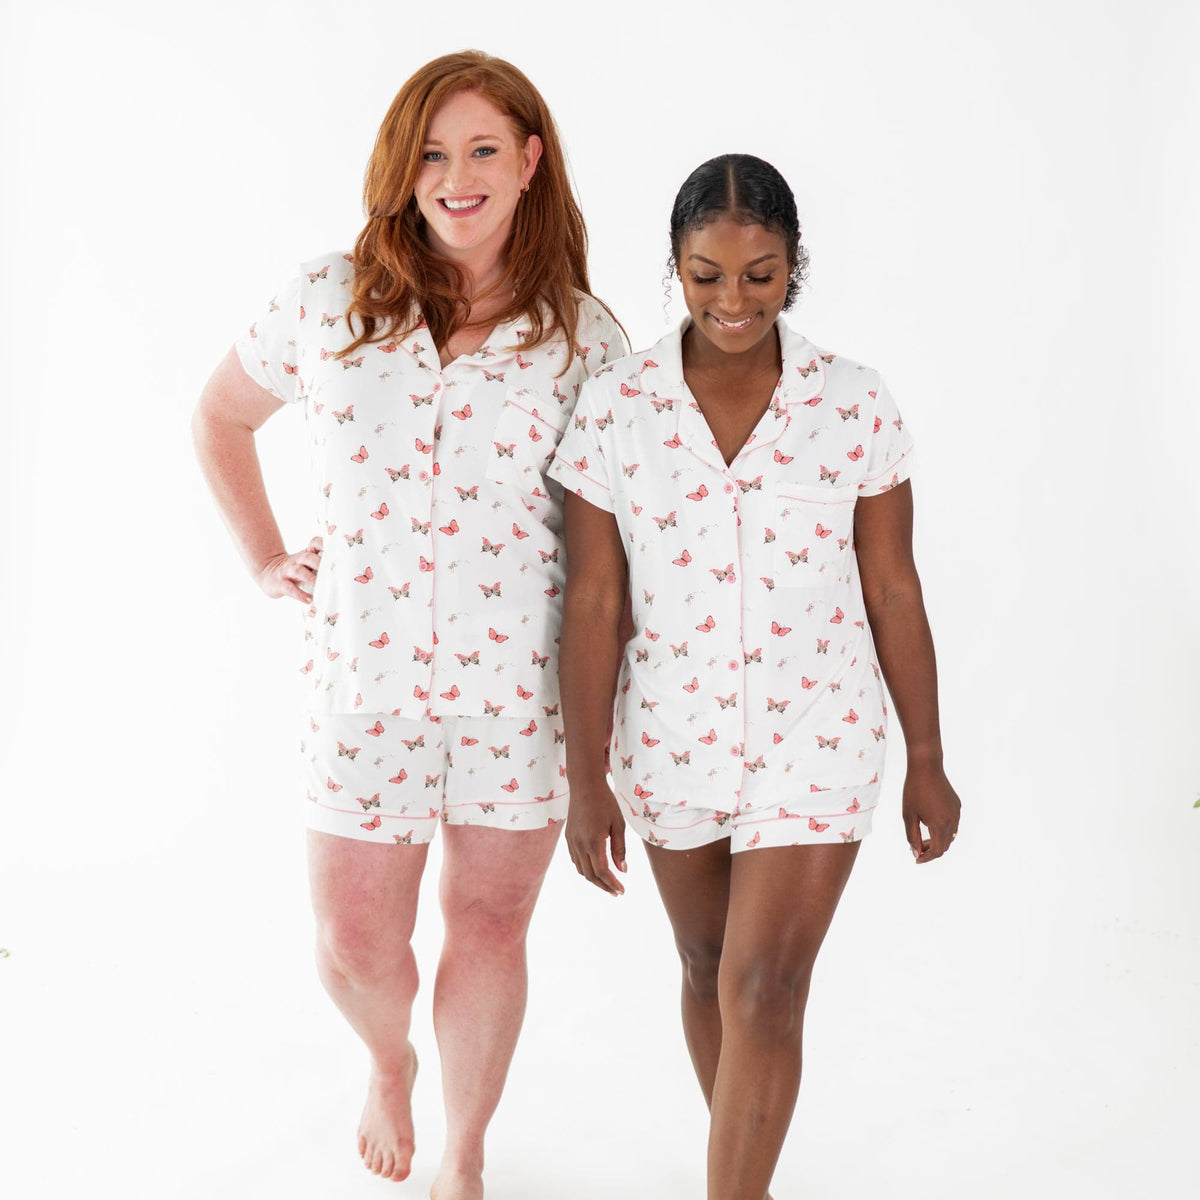 Models wearing Kyte Baby Women's Short Sleeve Pajama Sets in Butterfly